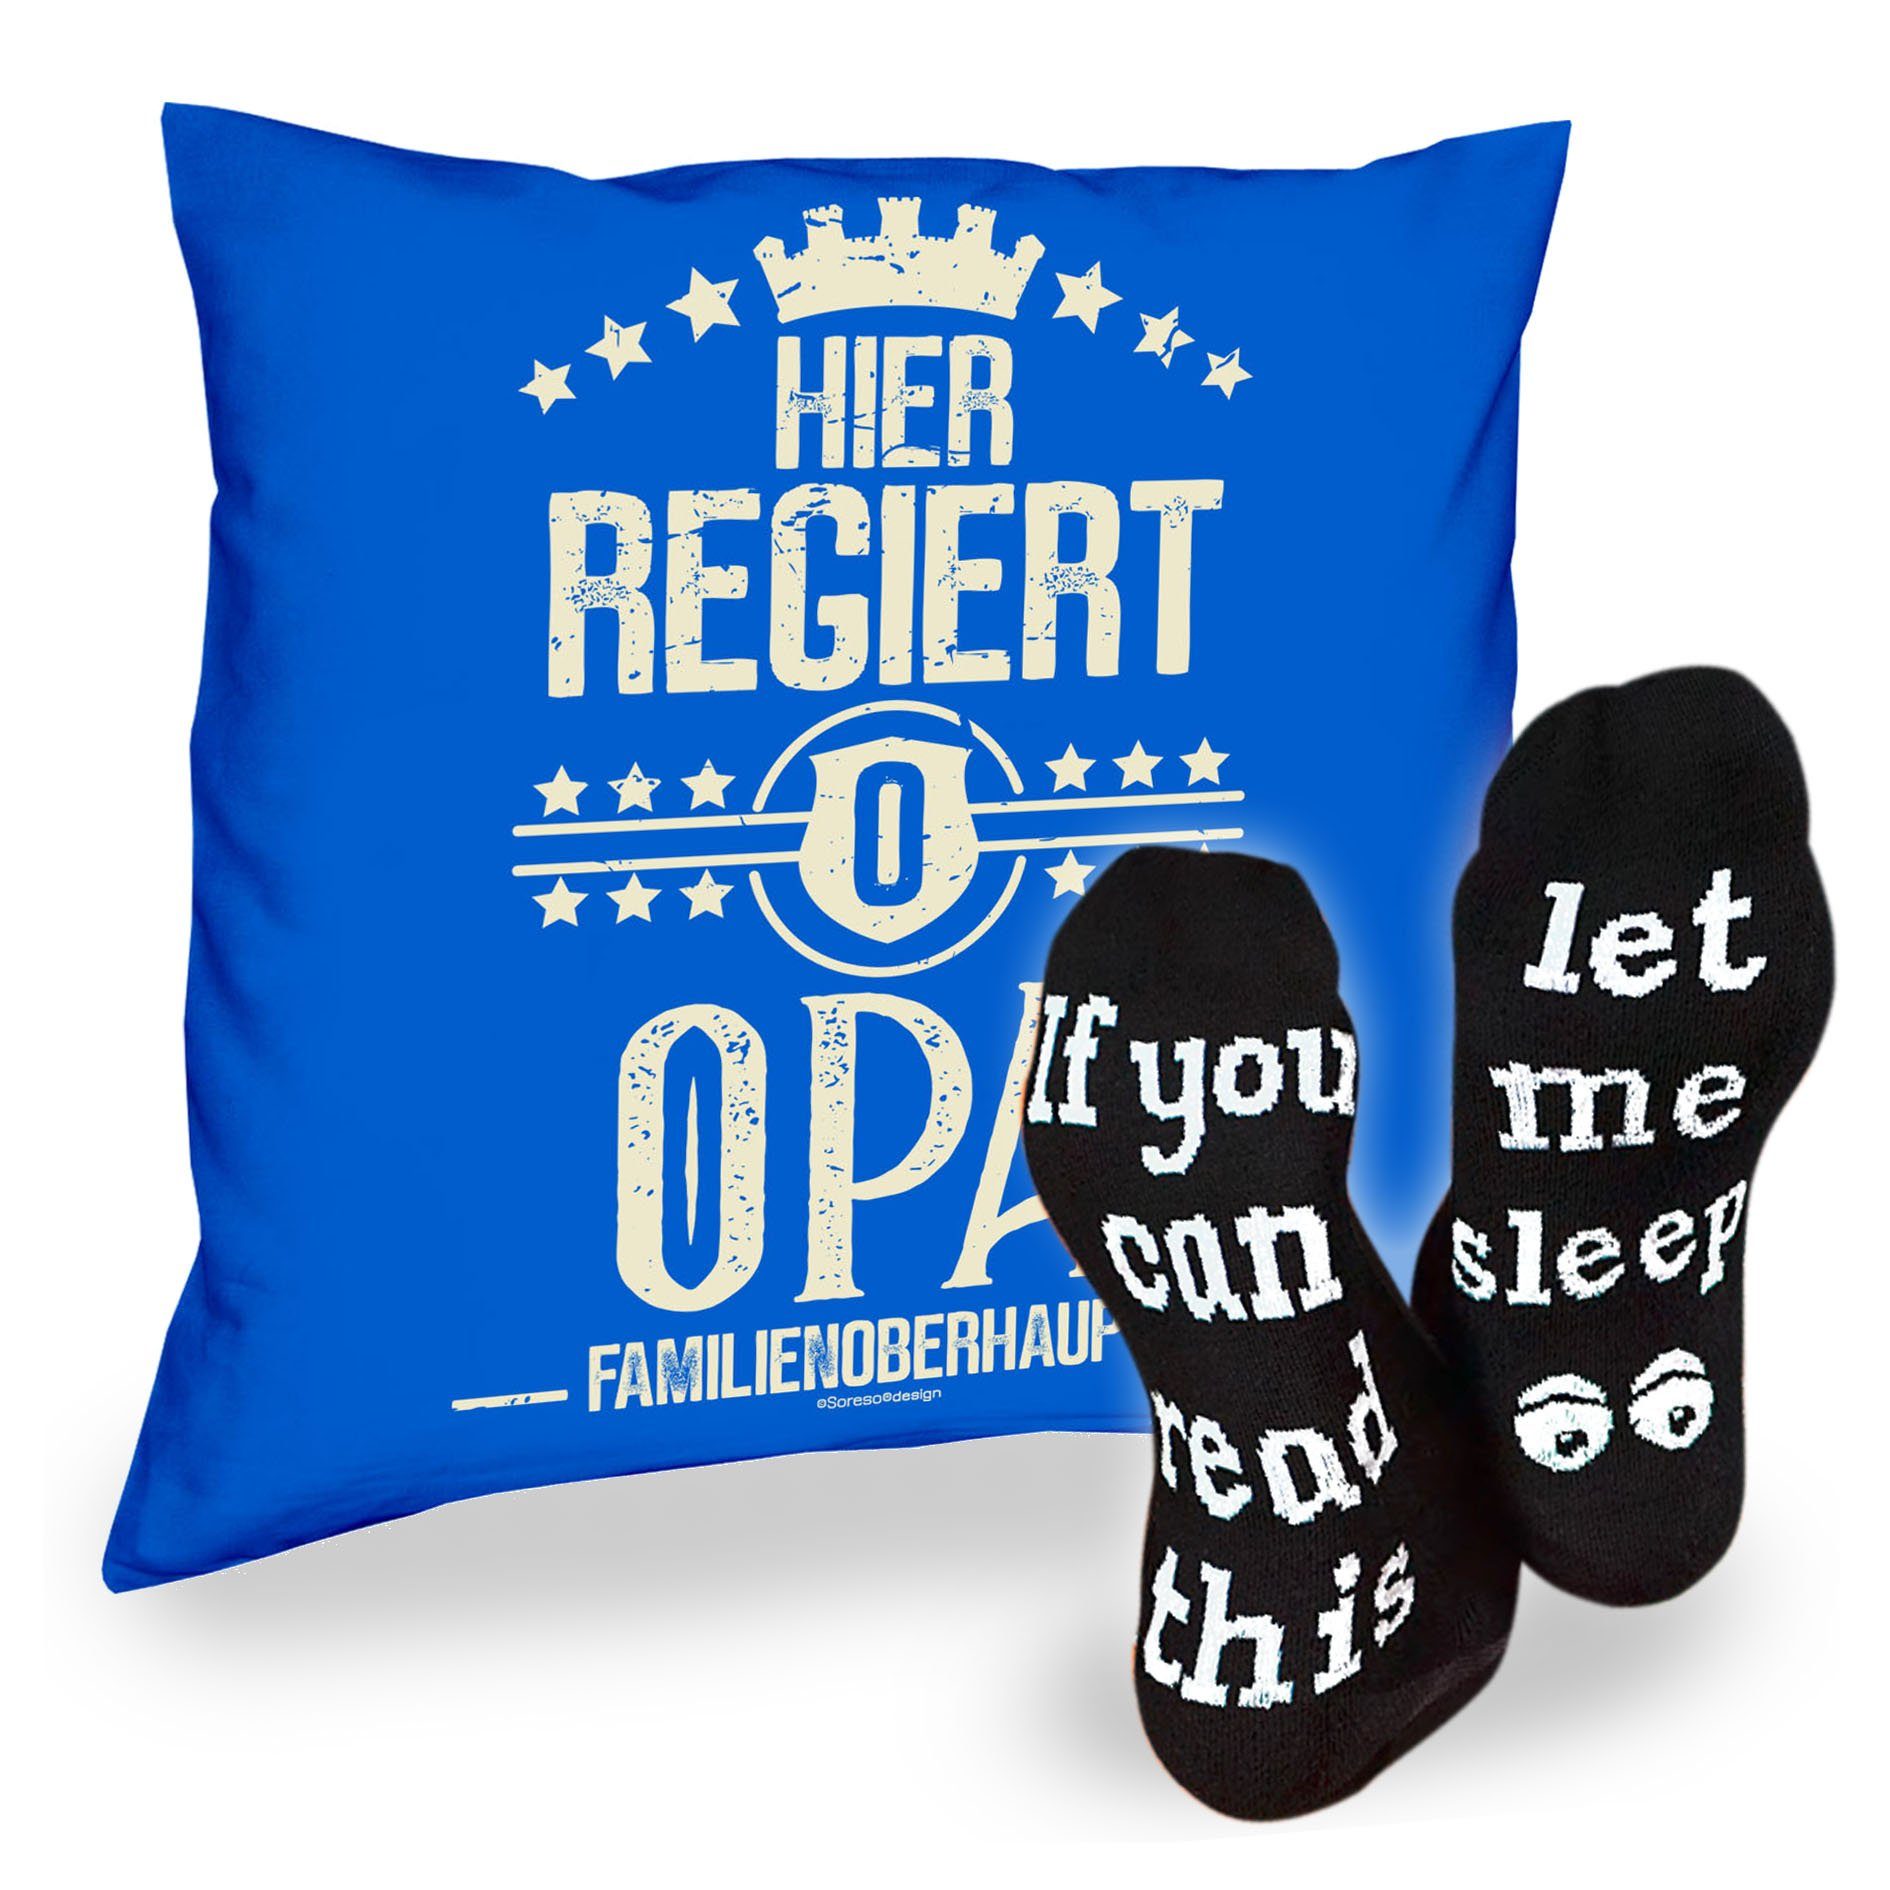 Hier Sprüche Opa & Sleep, regiert Vatertagsgeschenk royal-blau Socken Kissen Soreso® Männer Dekokissen Opa